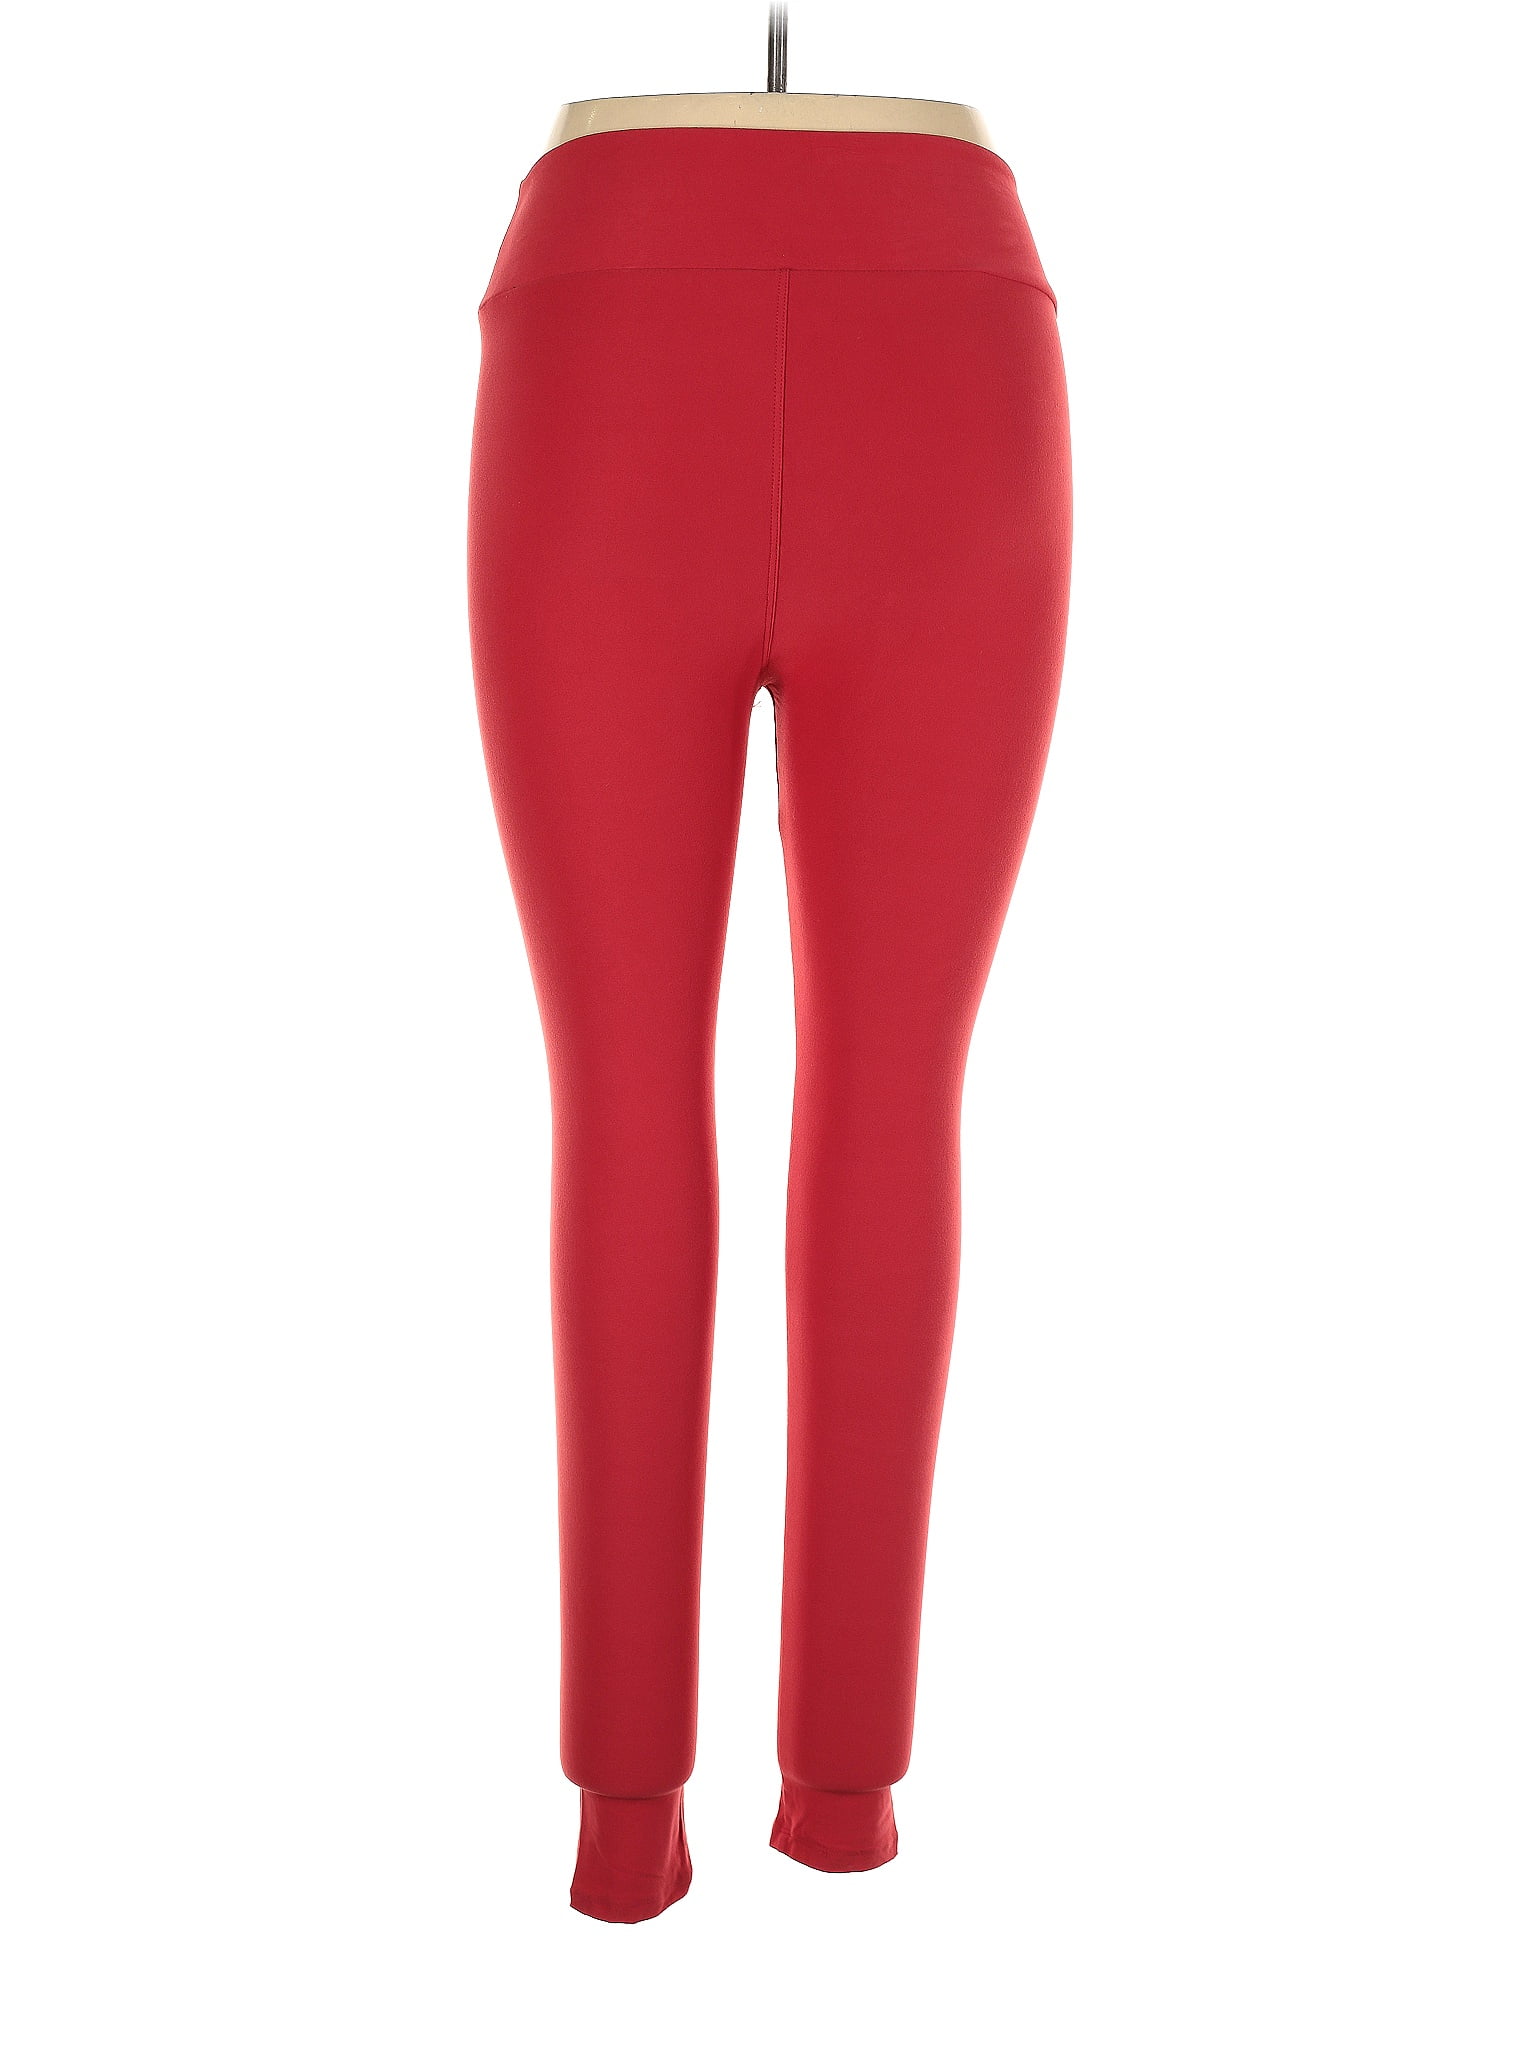 LuLaRoe, Pants & Jumpsuits, Lularoewomens Leggings Size Tc Love Ya Red  Pink White Stripes Tie Dye Nwt